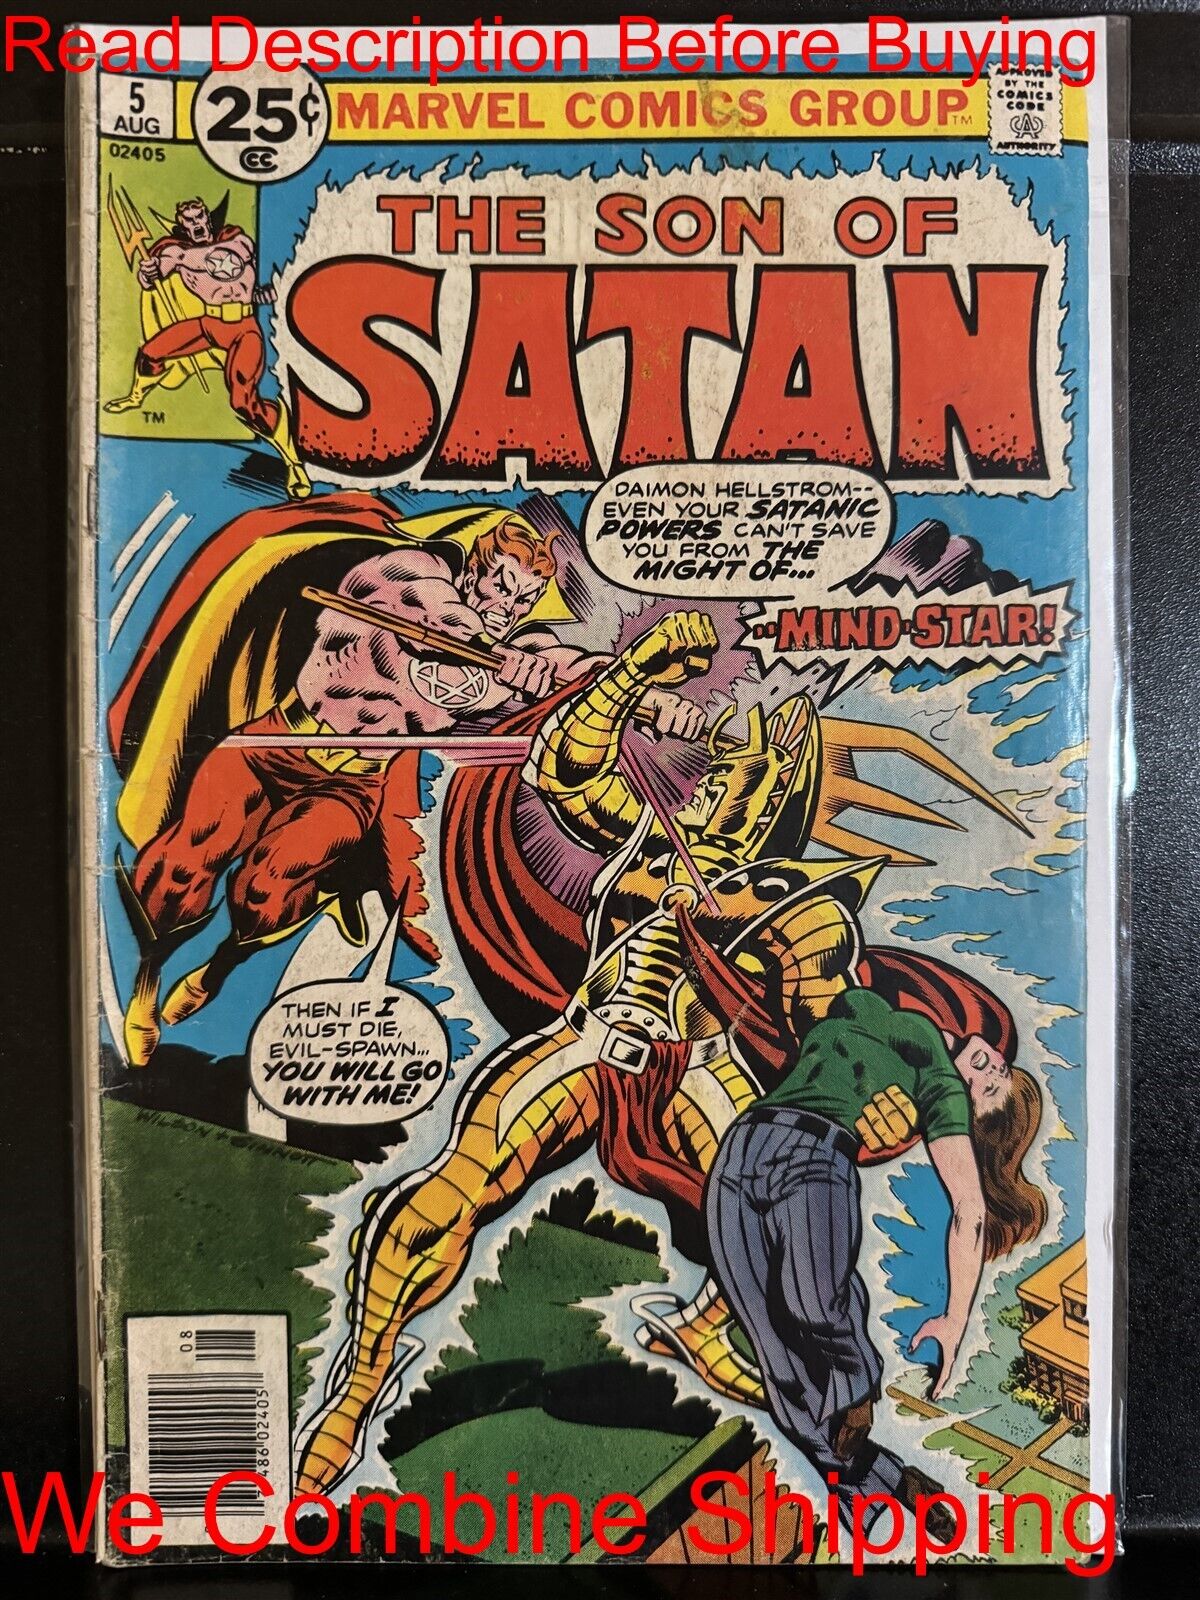 BARGAIN BOOKS ($5 MIN PURCHASE) Son of Satan #5 (1976 Marvel) Free Combine Ship